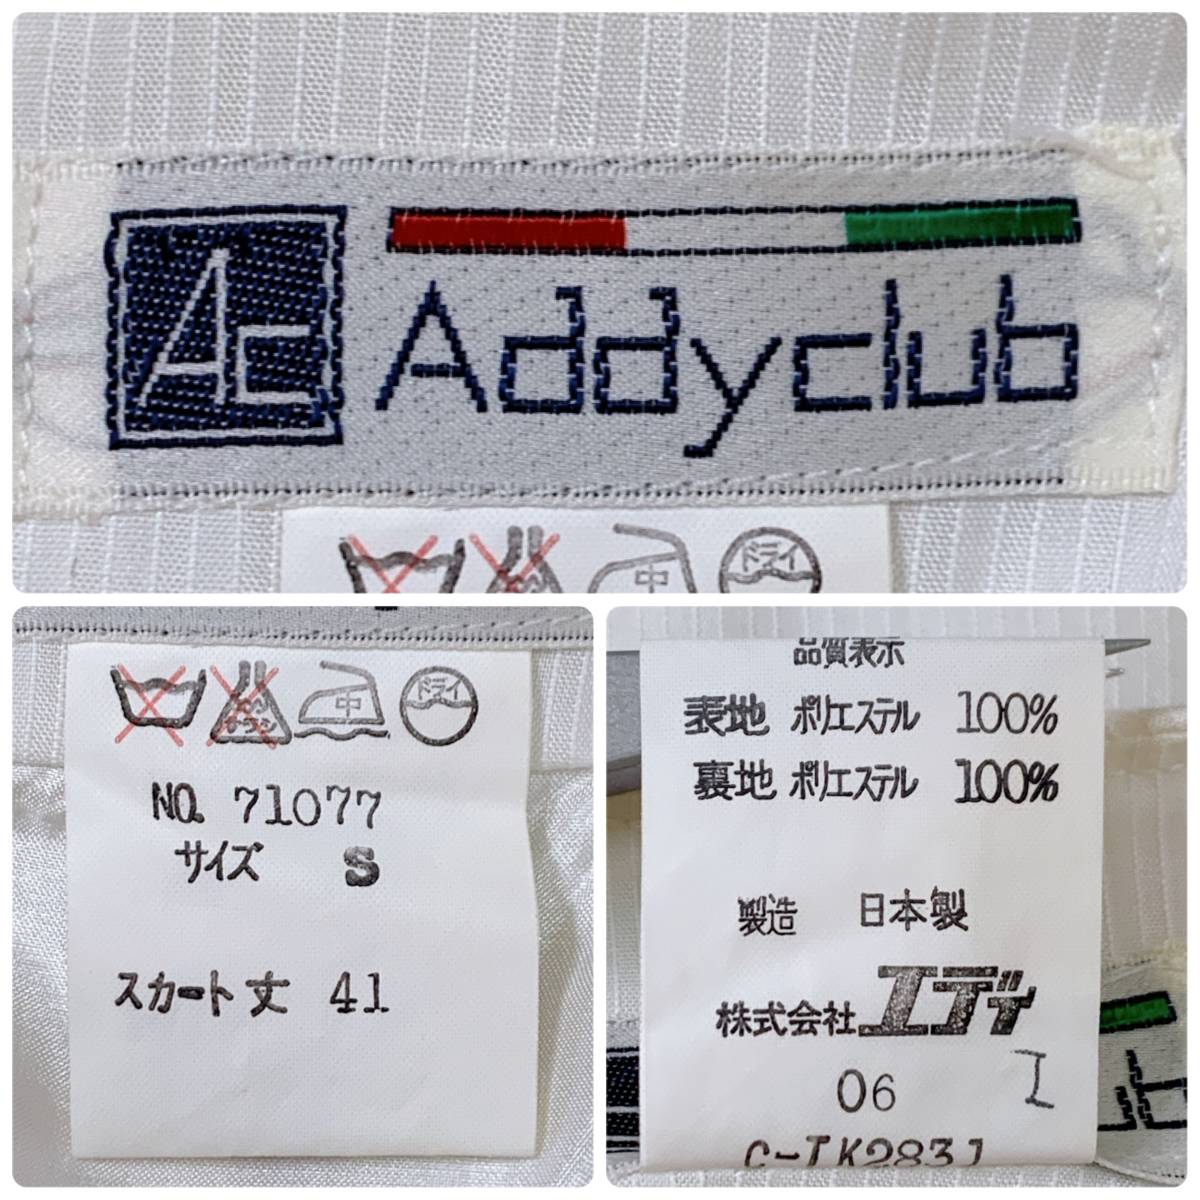 S1402 Addy club レディース 台形スカート ショート カジュアル S 白 無地 華やか クリーンなホワイトスタイル 裏地有 飾りボタン 日本製_画像10